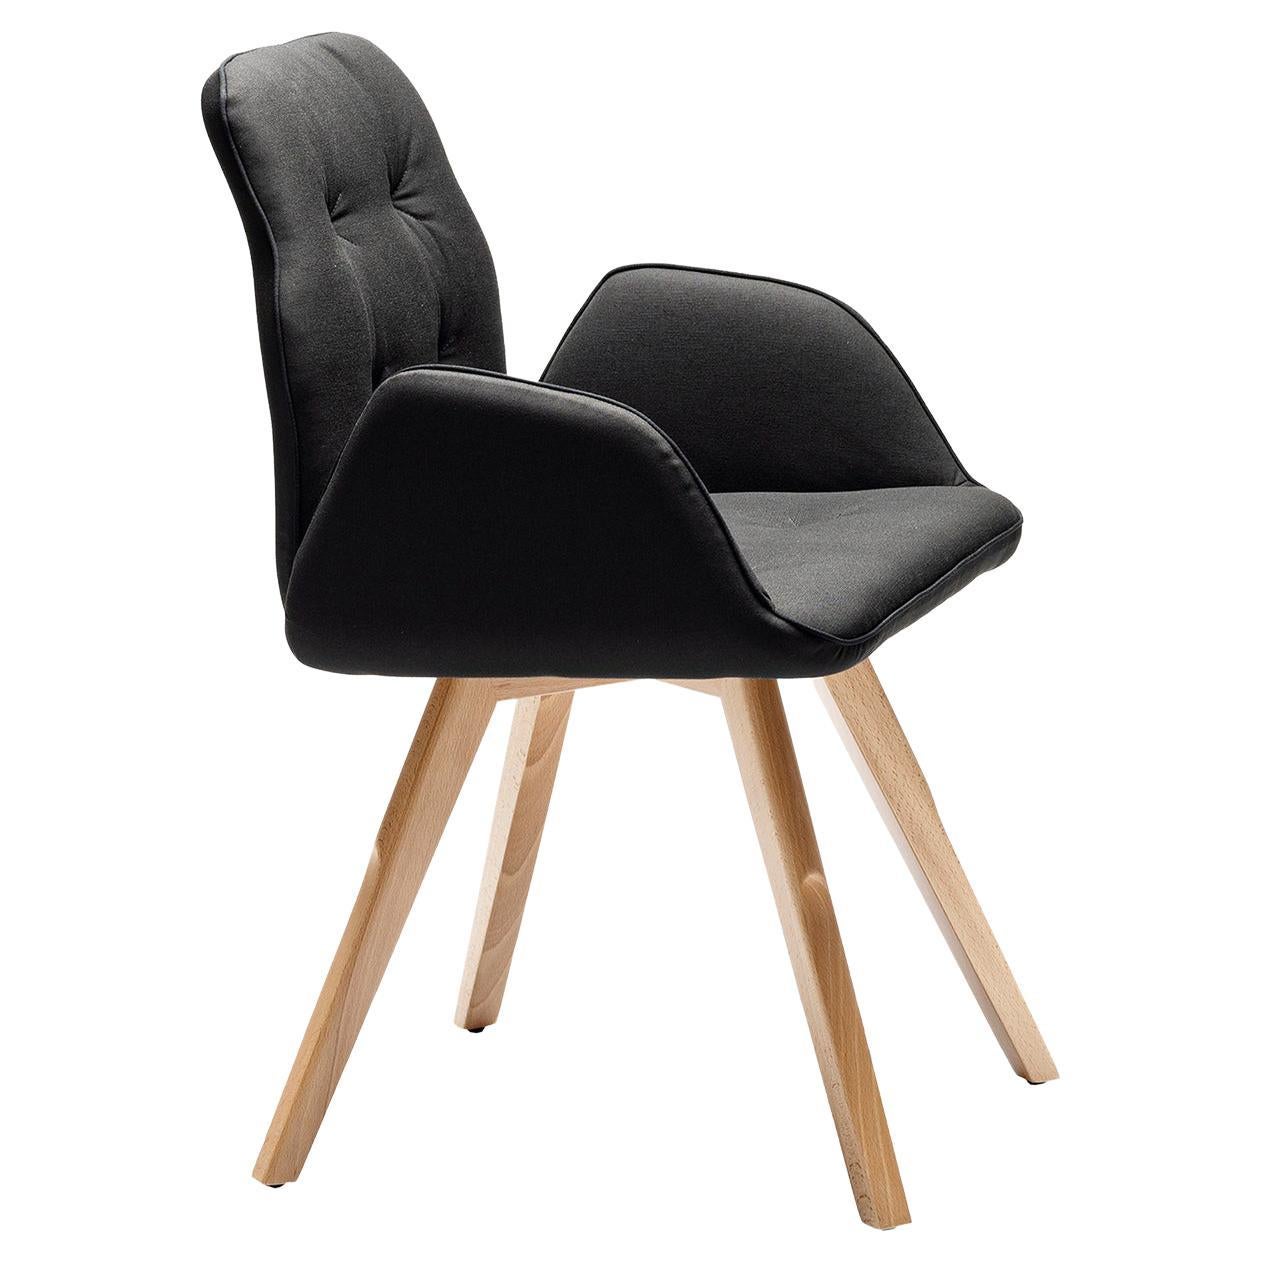 Betibù SP Black Chair by Dario Delpin